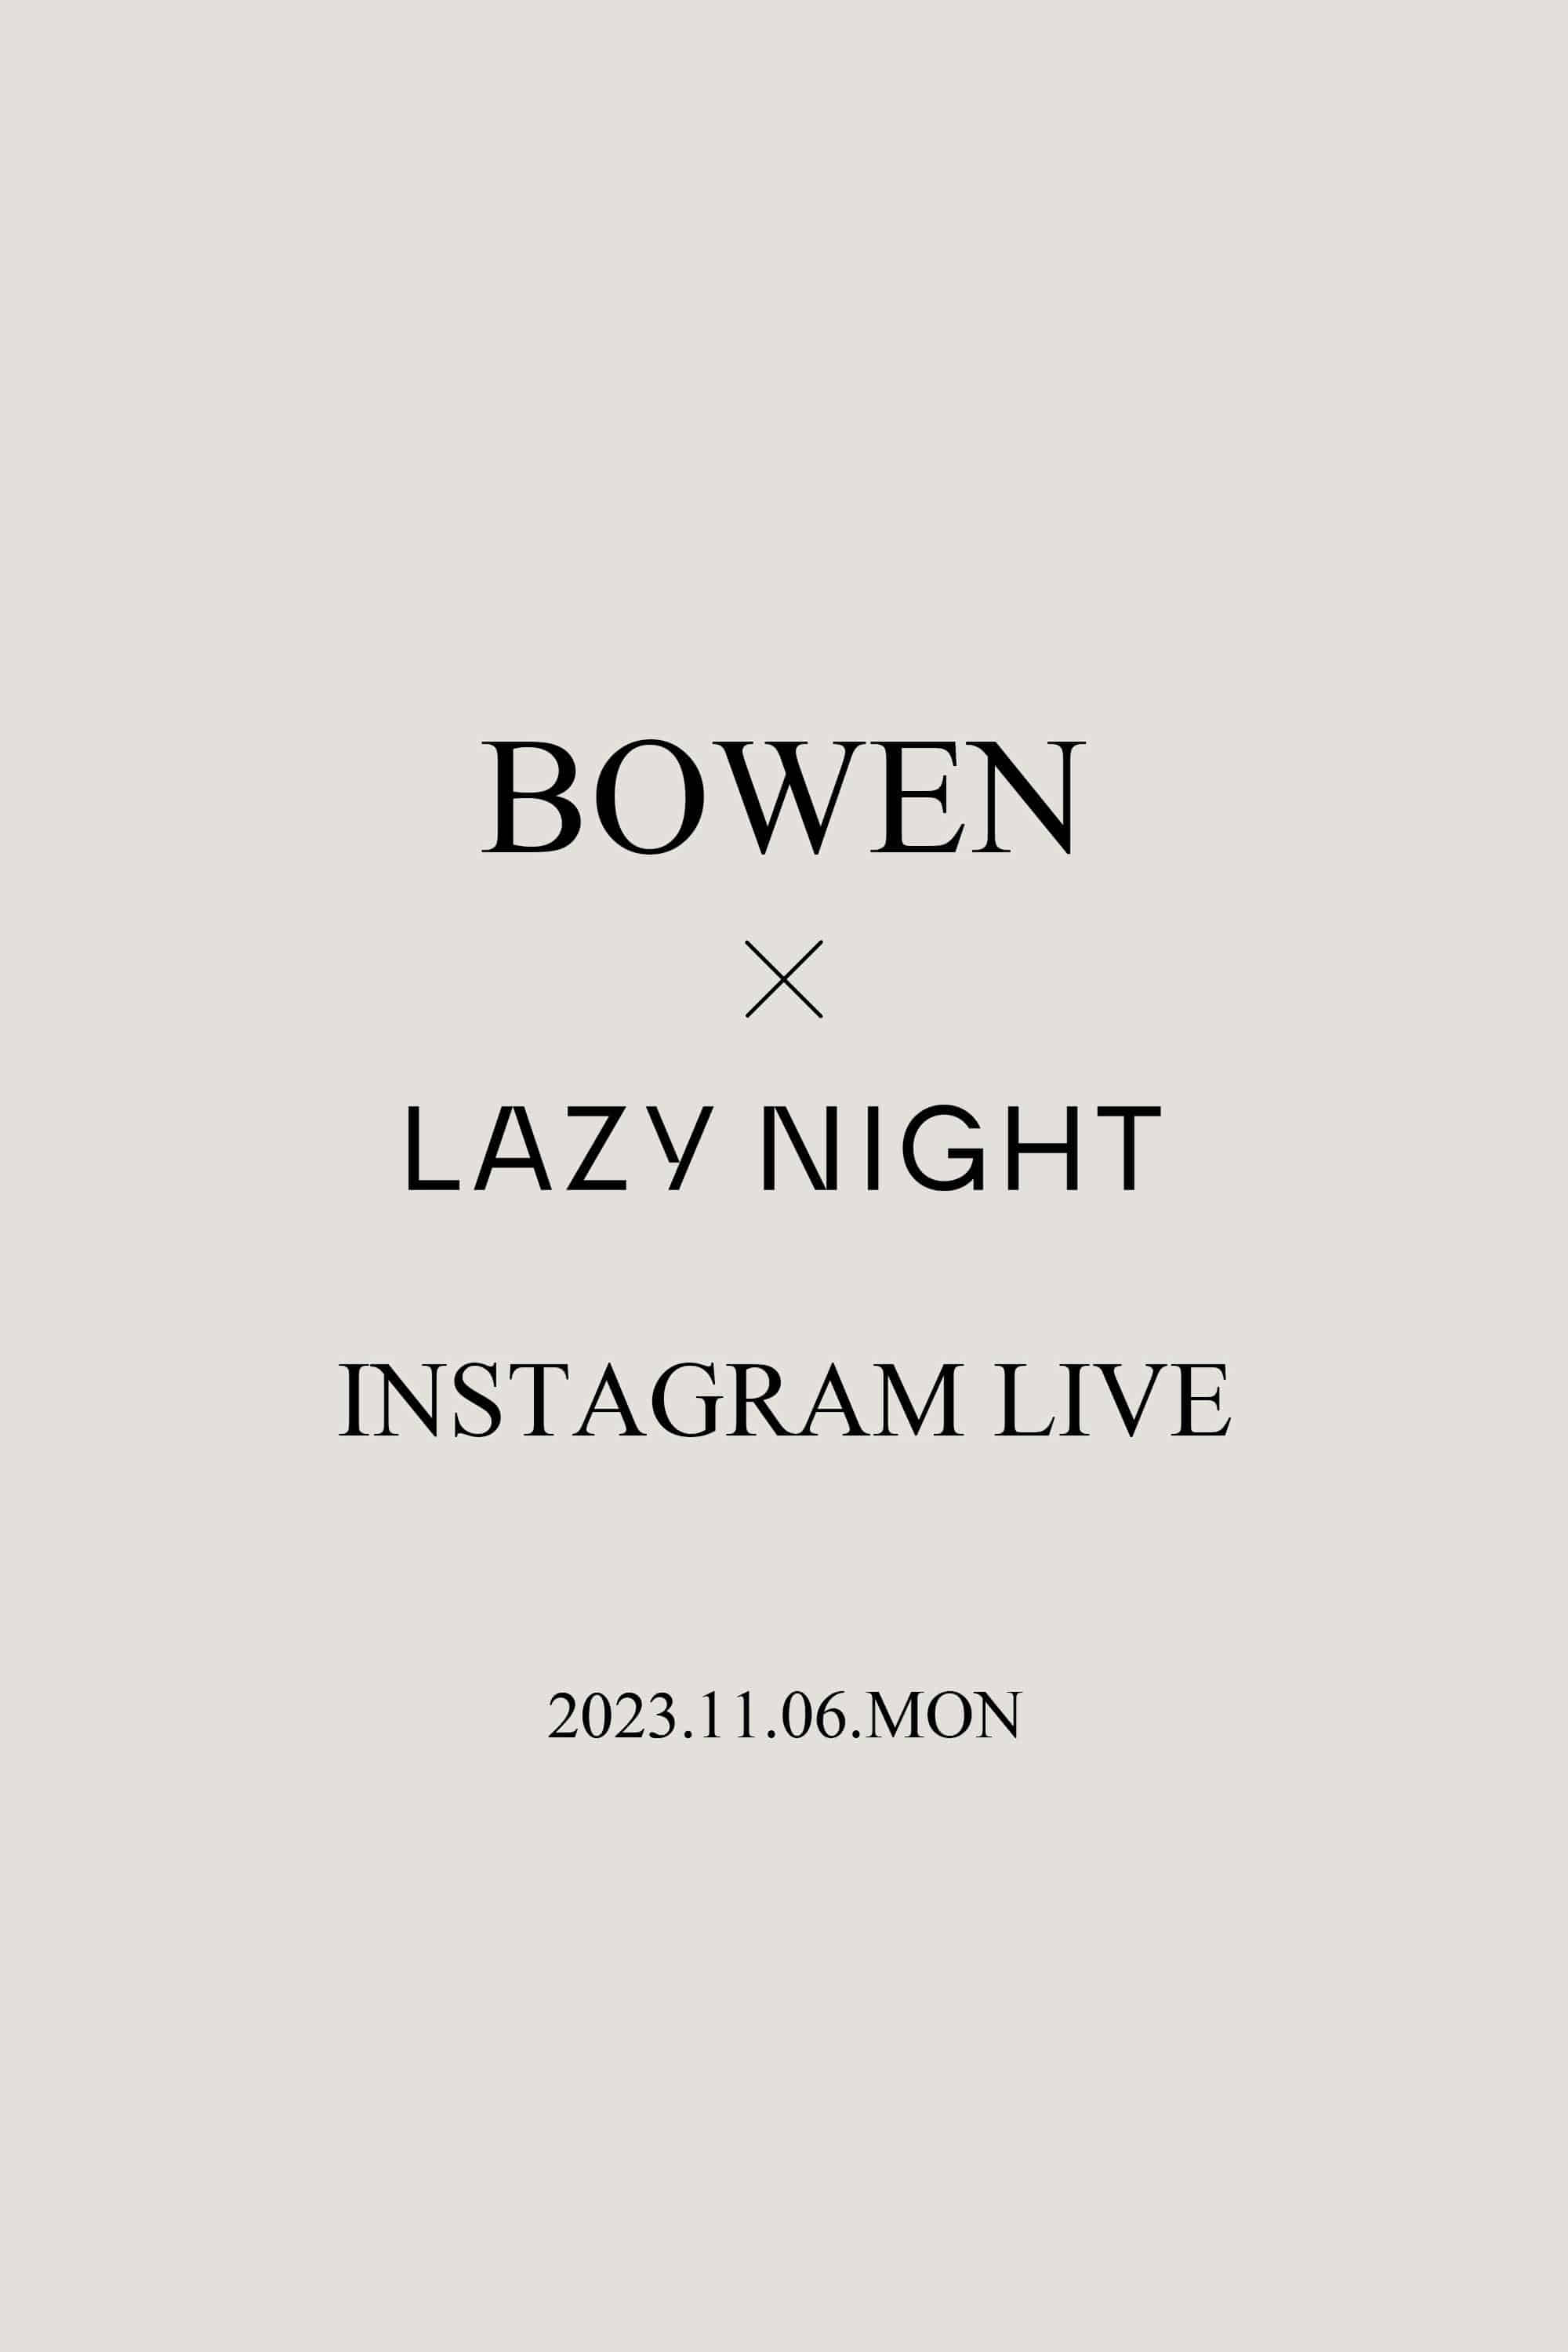 BOWEN X LAZYNIGHT INSTAGRAM LIVE VOD 2023.11.06 MON